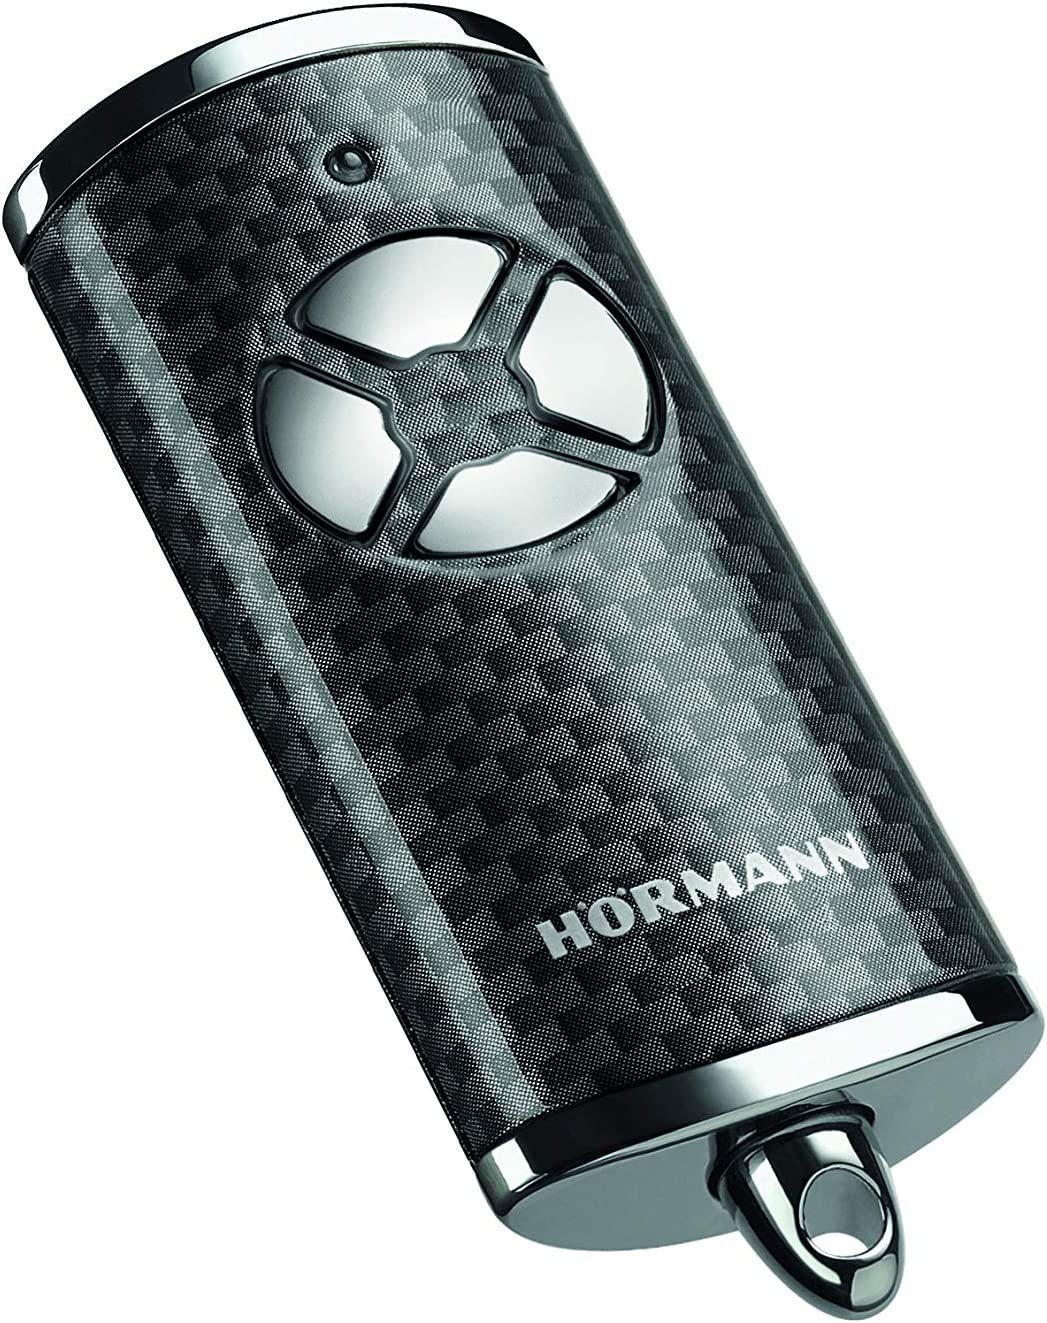 Hörmann Garagentor-Funkempfänger HSE4 868-BS Hochglanz Chrom Carbon Fernbedienung